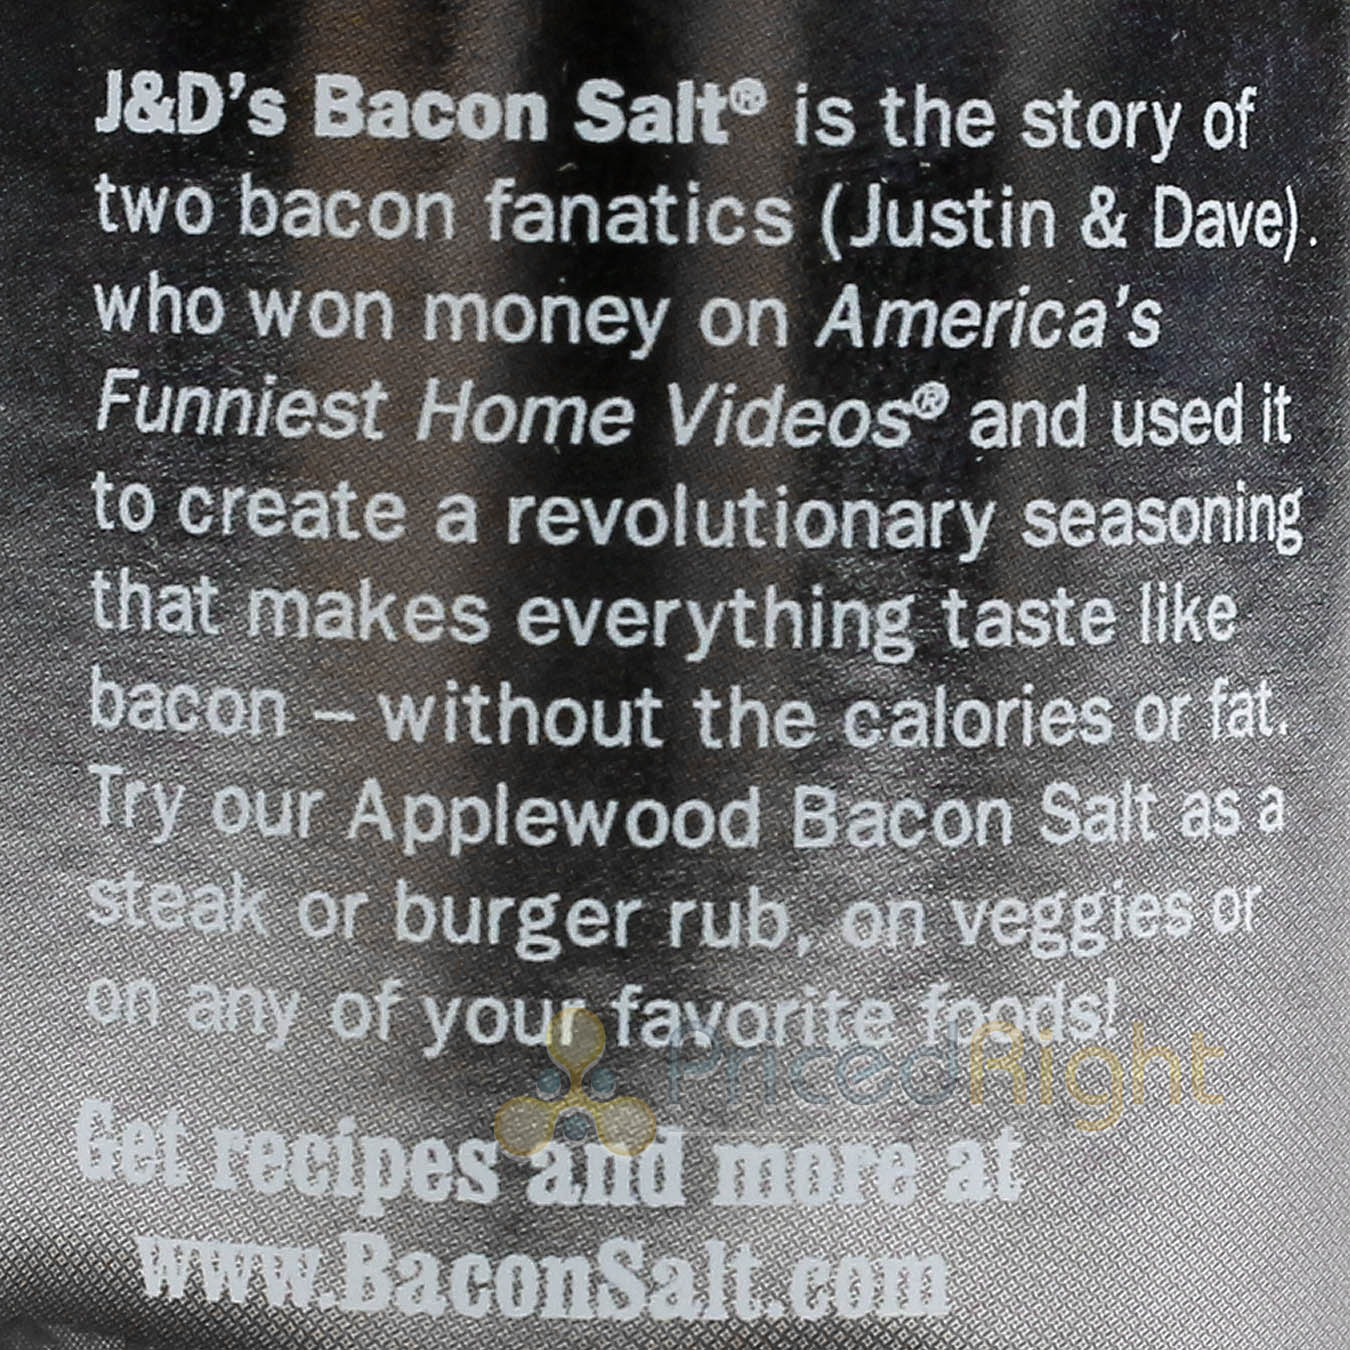 J&D's Applewood Bacon Salt 2.5oz All Natural Bacon Flavored Seasoning Spice Rub